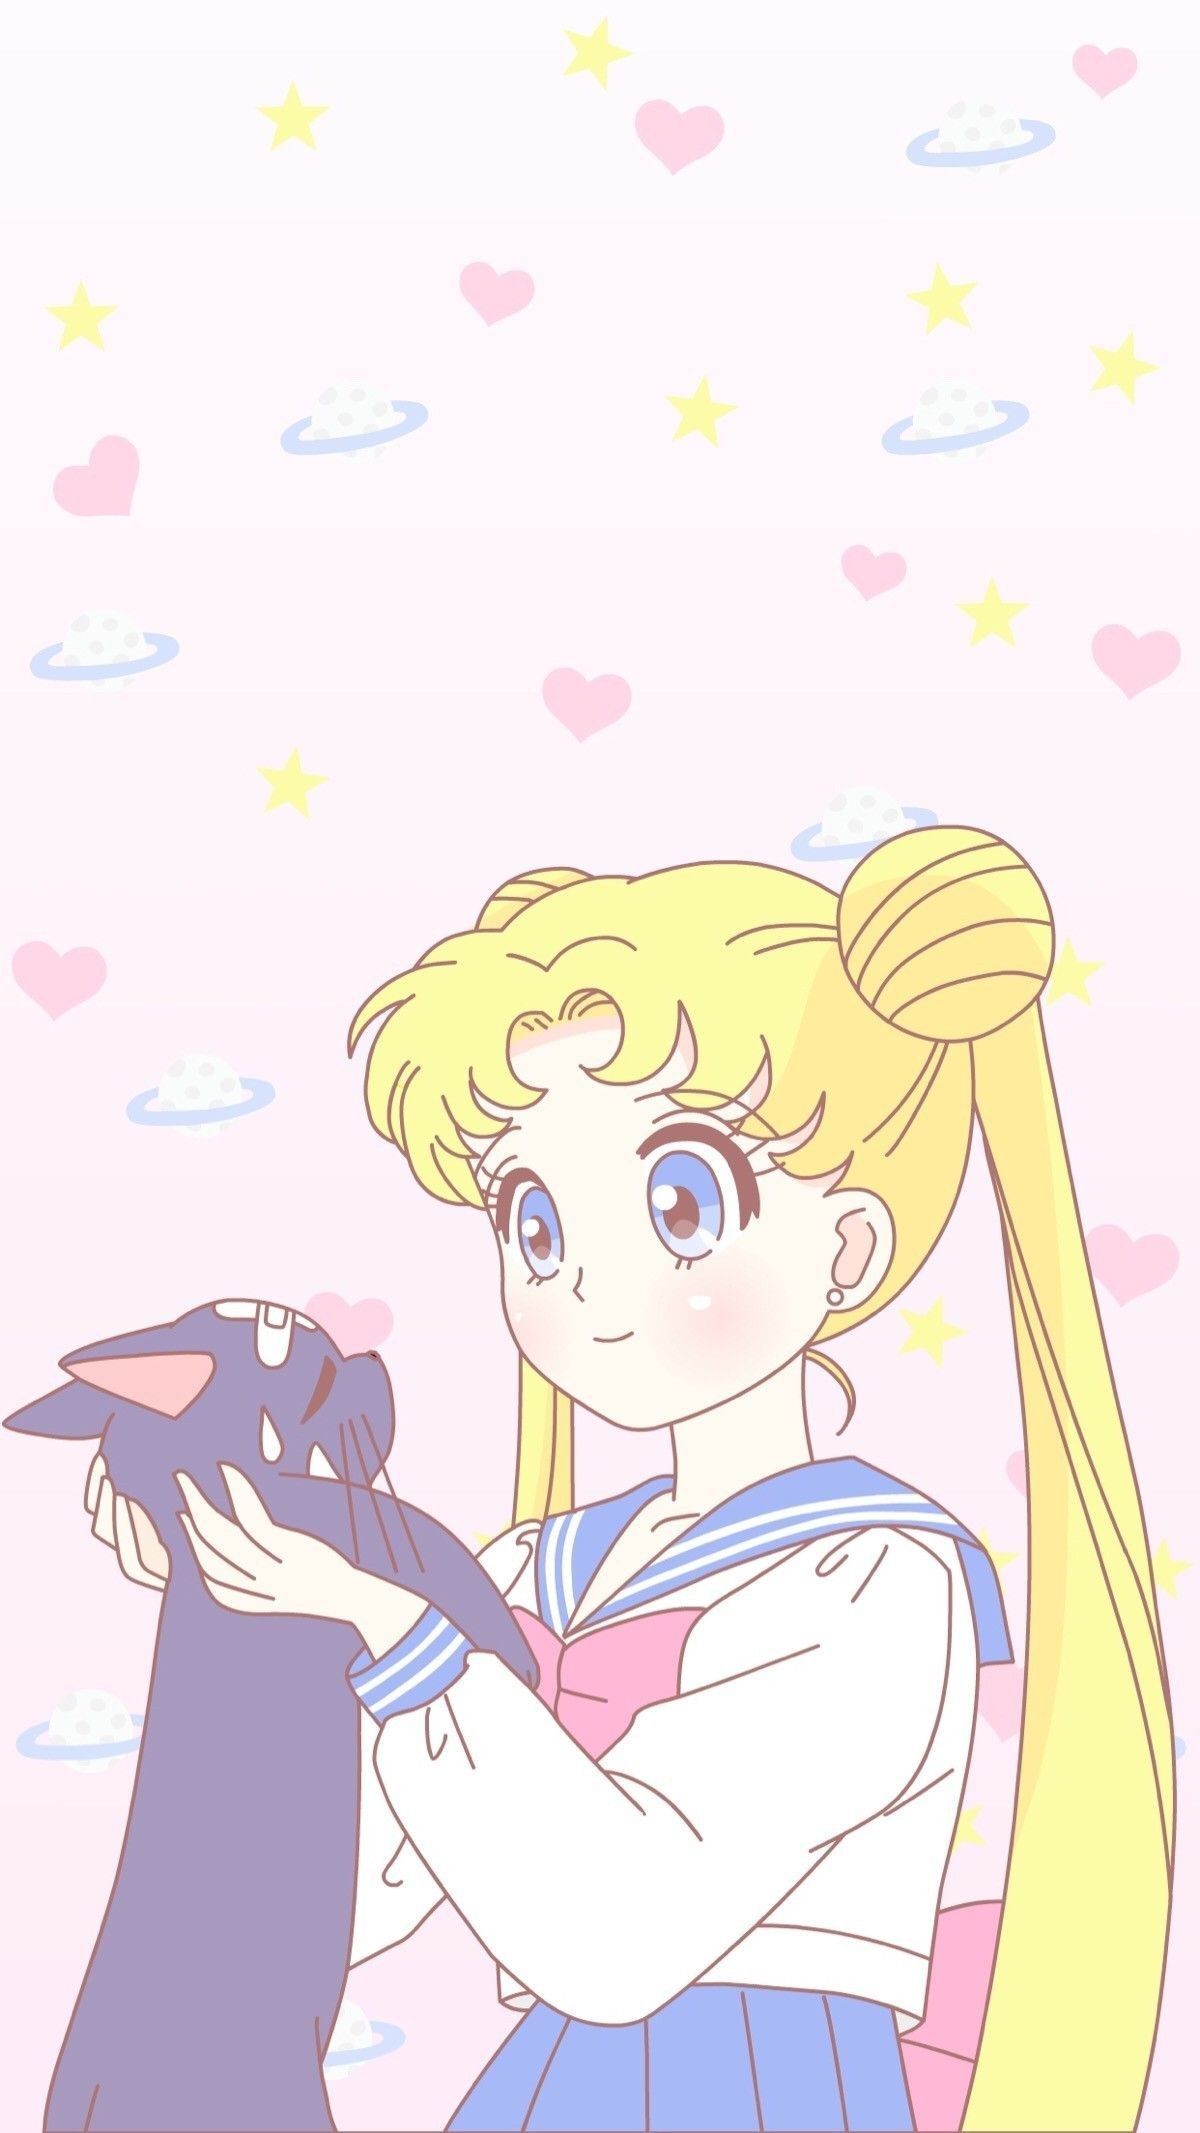 iPhone Aesthetic Lockscreen Sailor Moon Wallpaper. ipcwallpaper. Sailor moon wallpaper, Sailor moon aesthetic, Sailor moon background